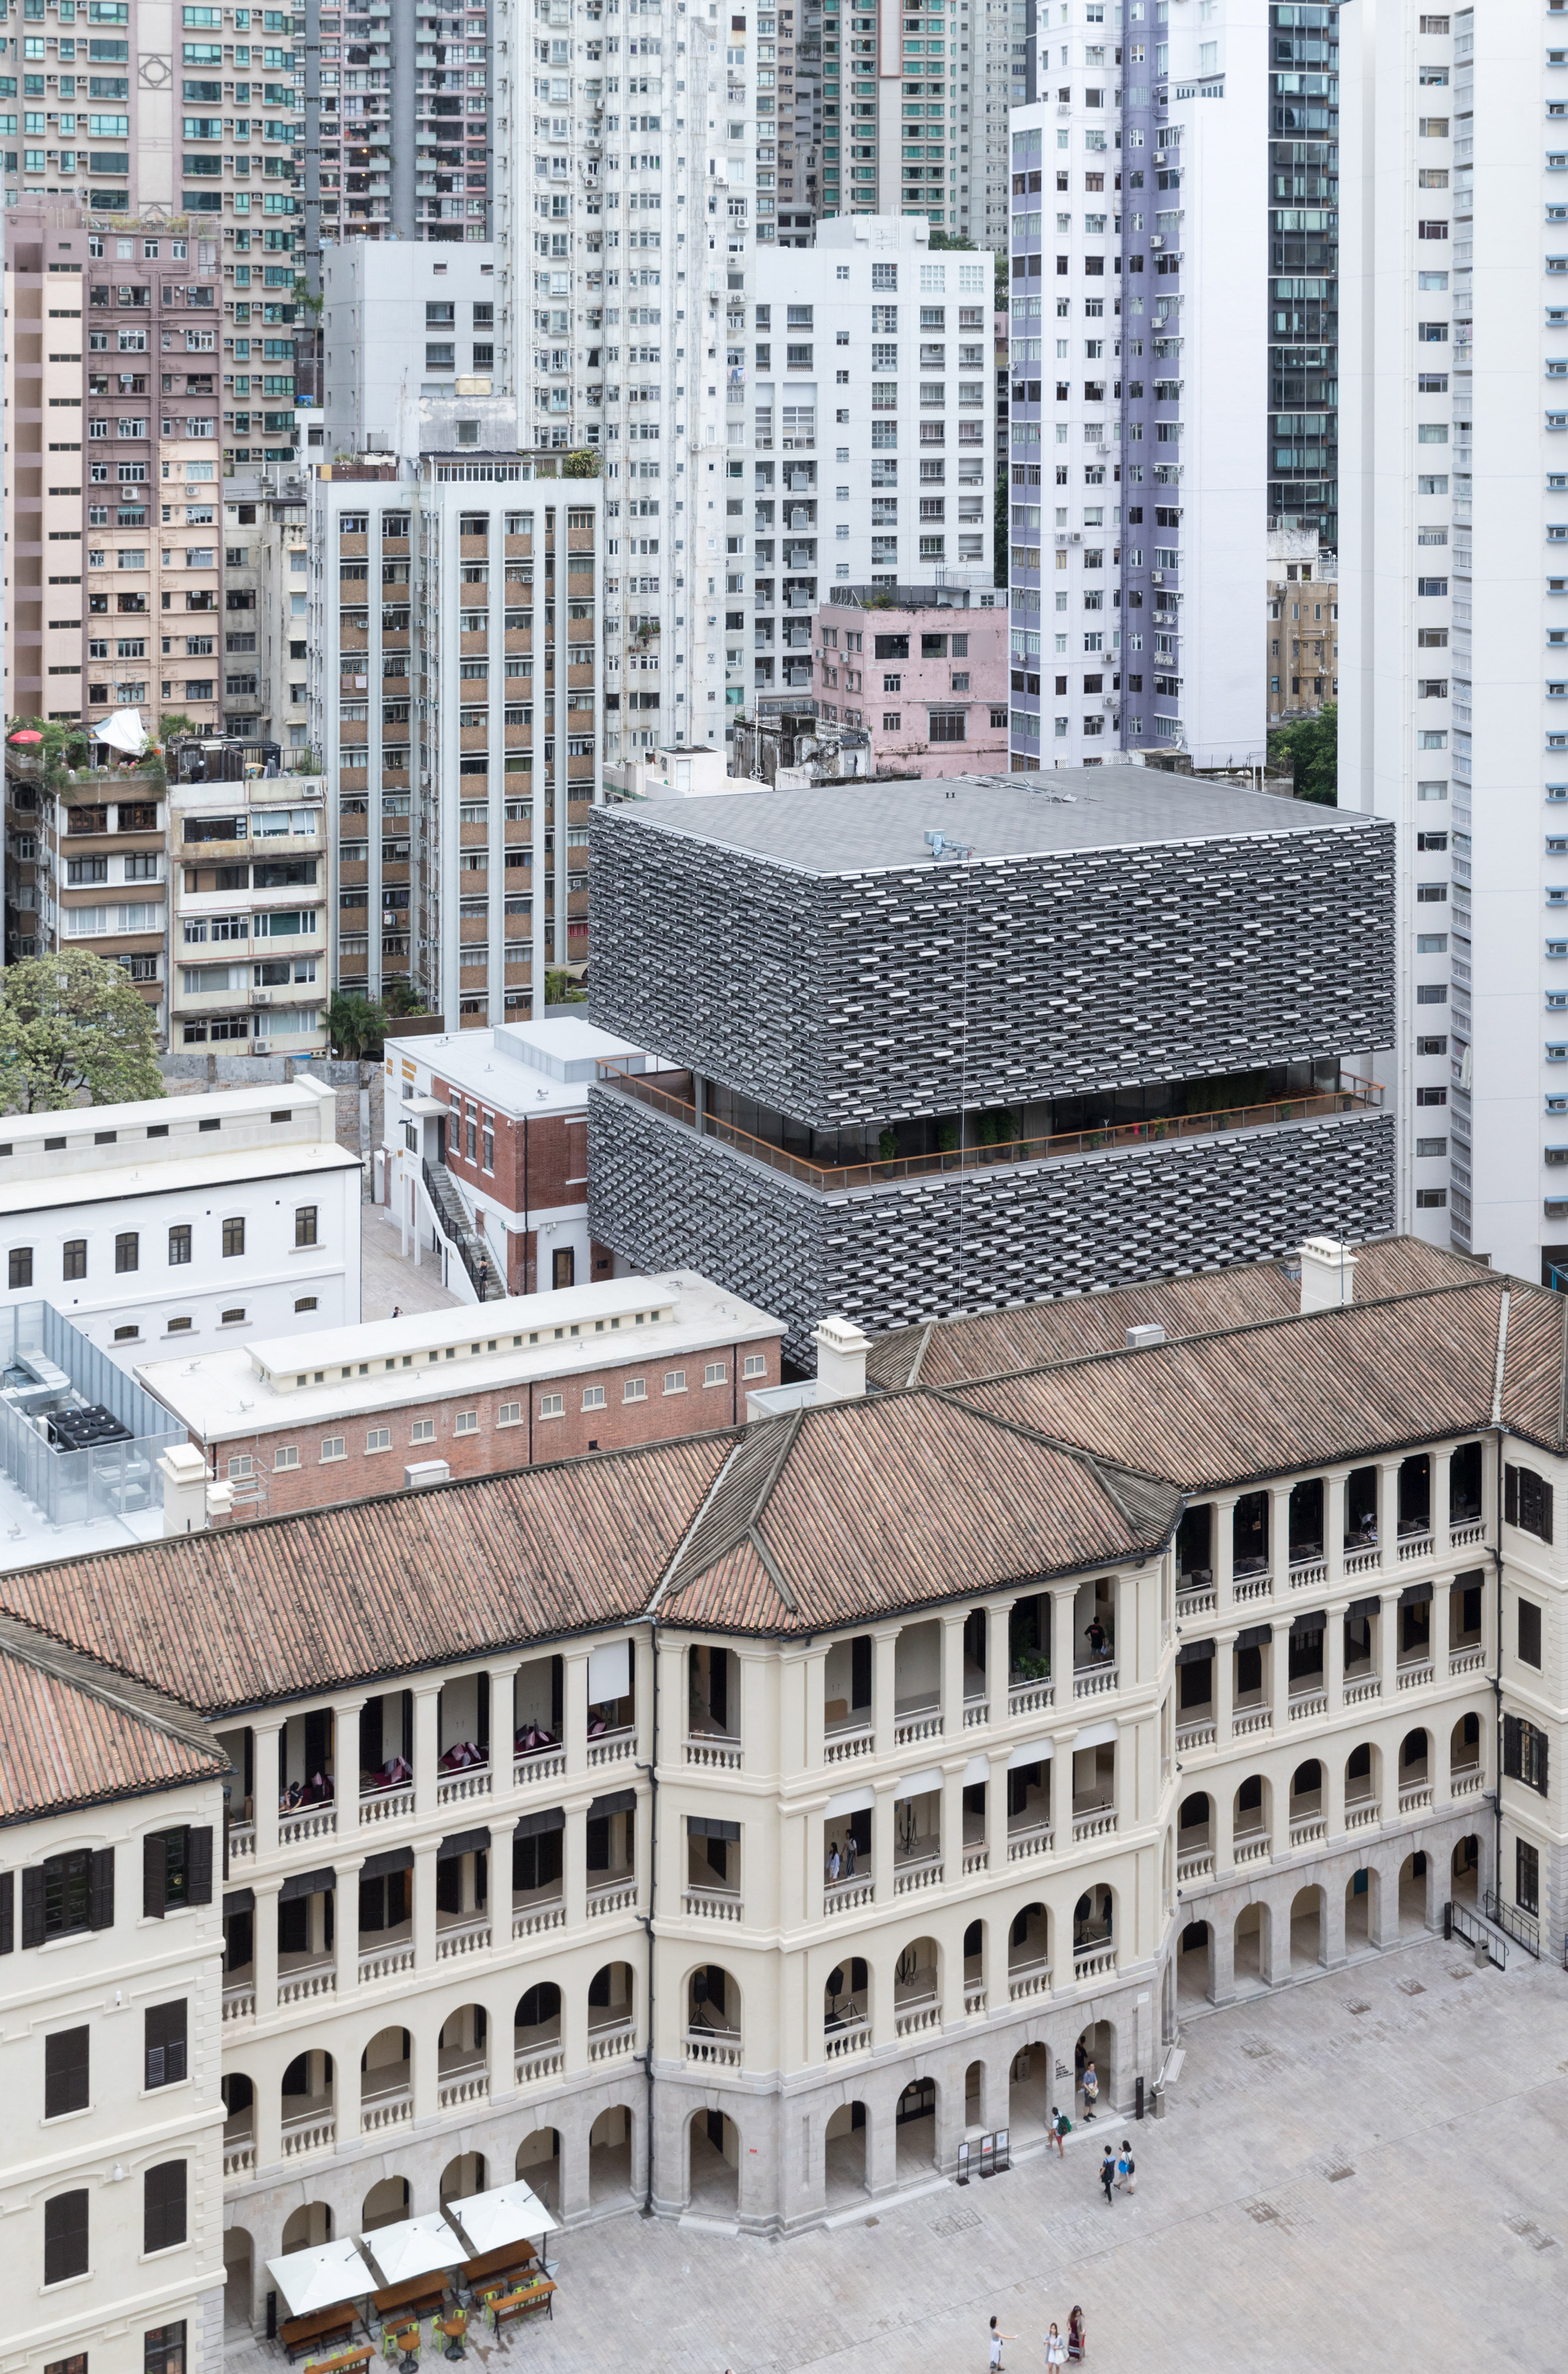 Herzog & de Meuron transforms colonial buildings in Hong Kong into Tai Kwun art centre